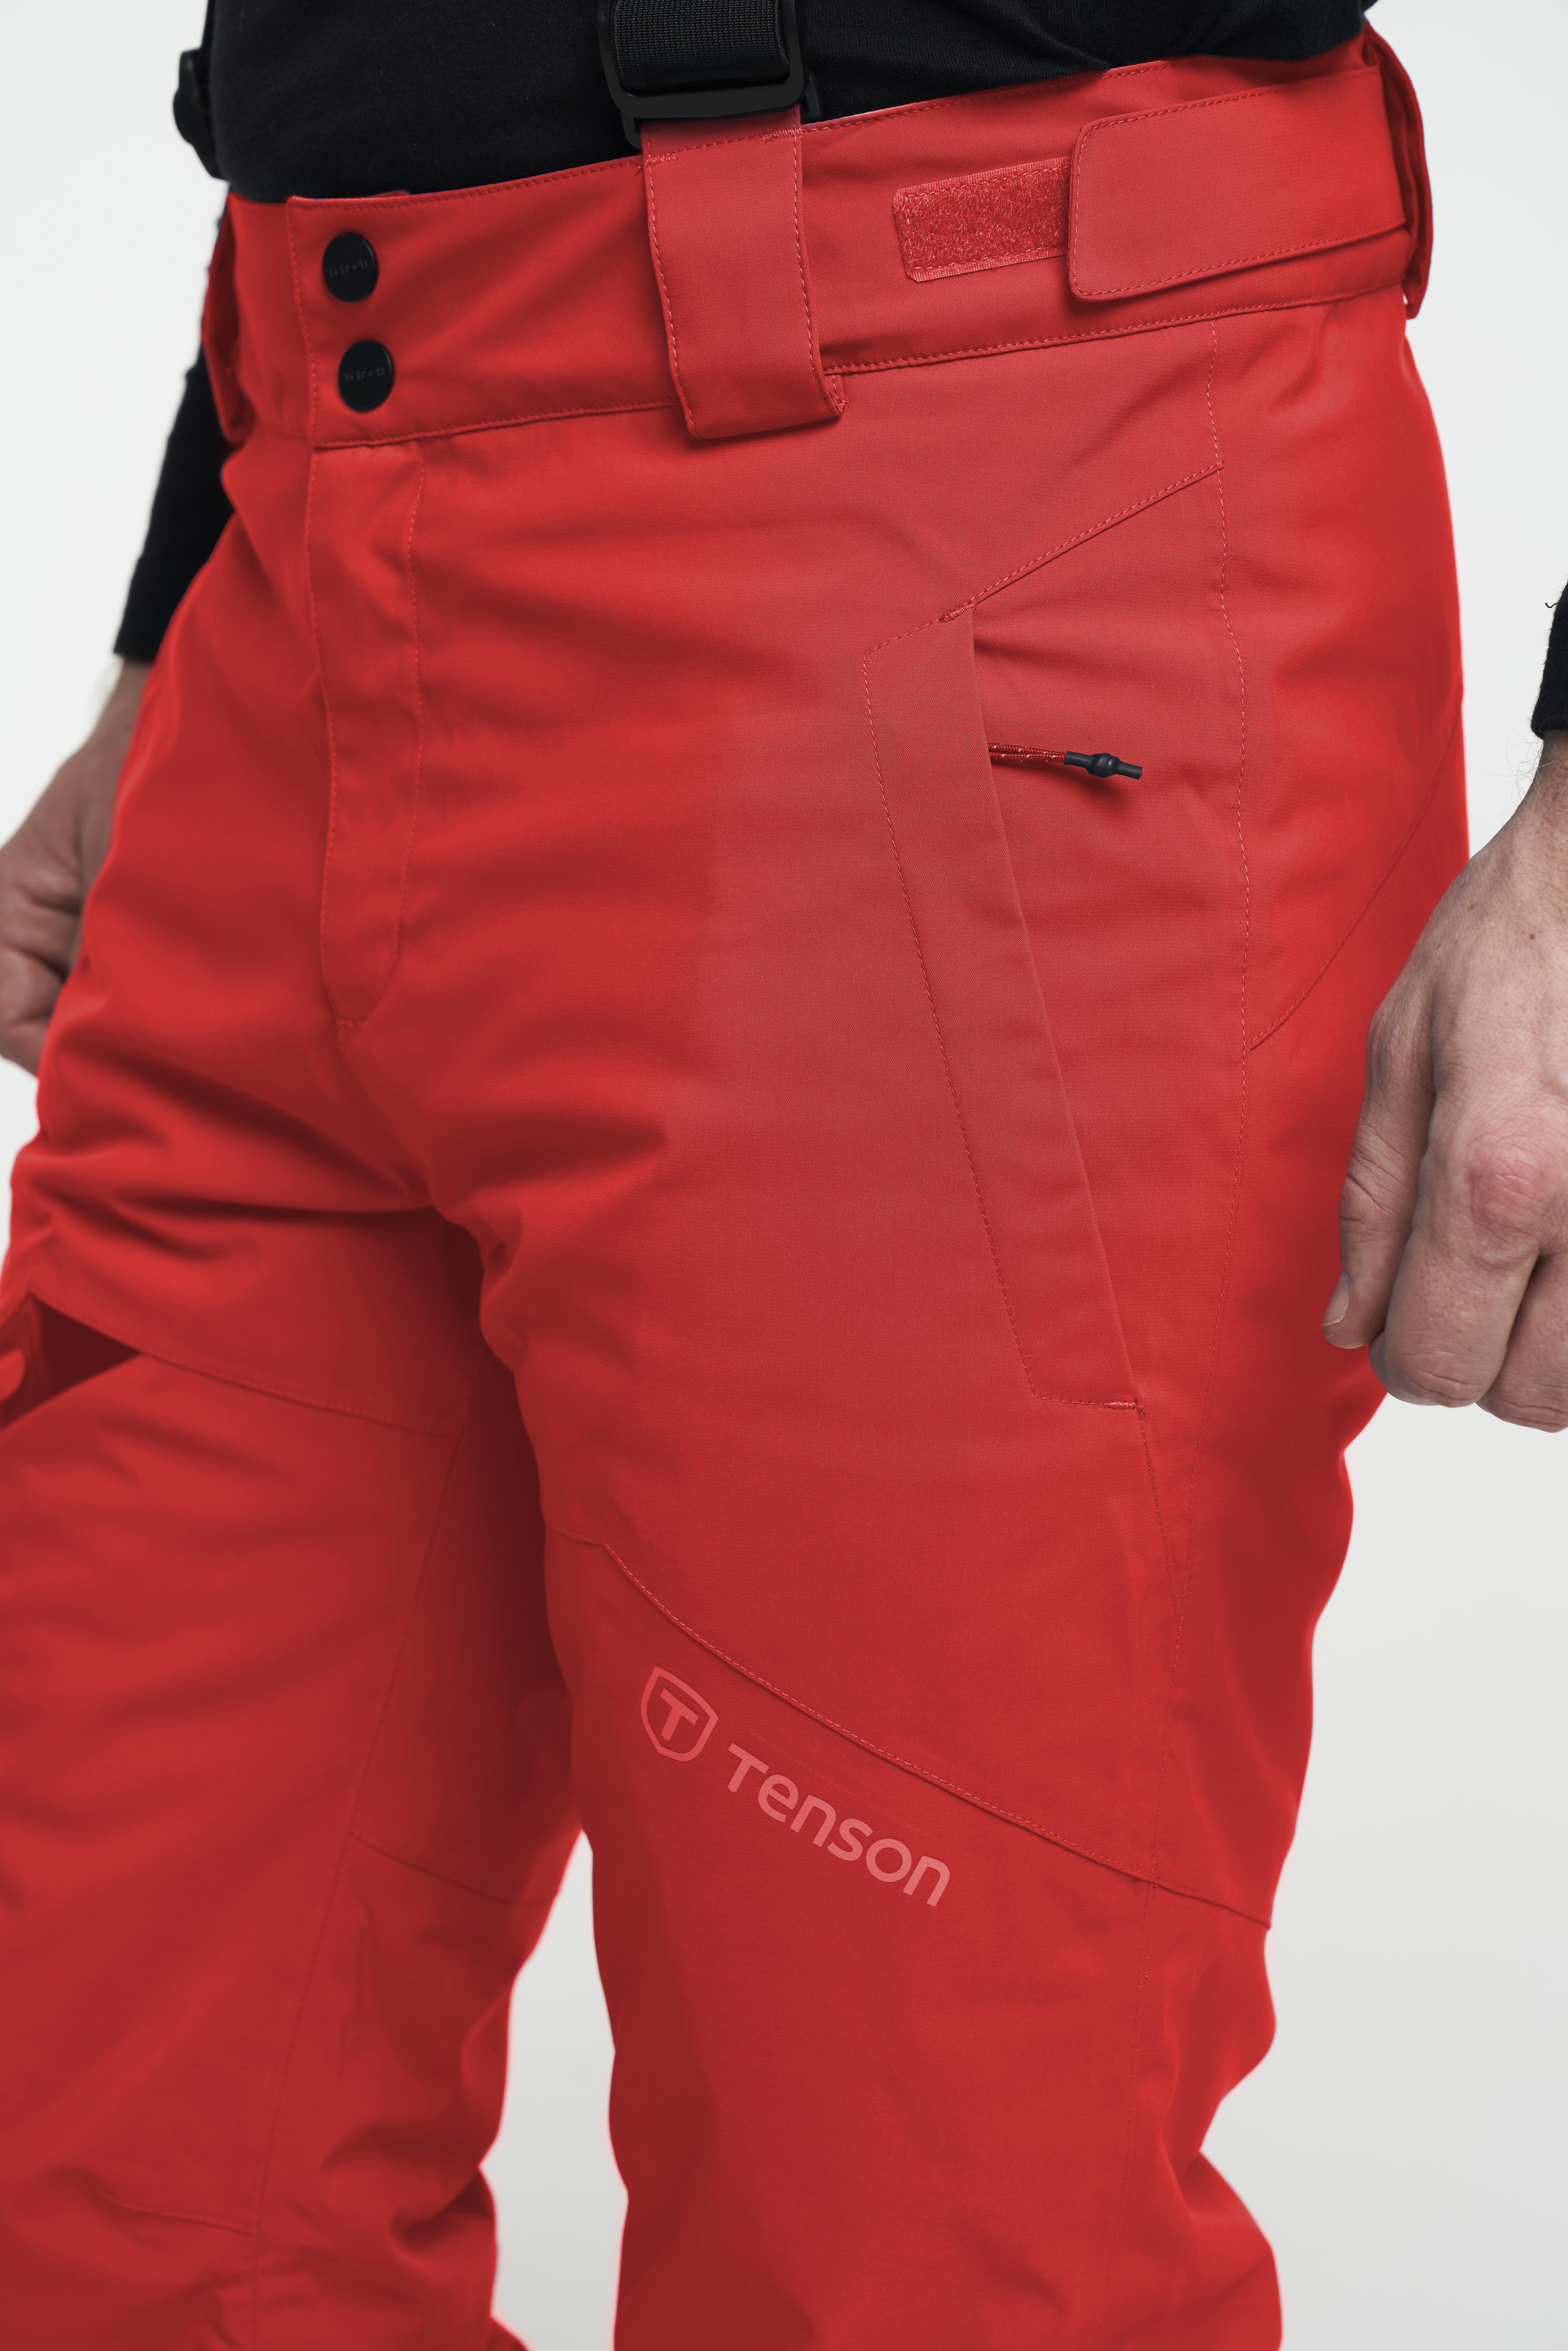 Tenson Mens Core MPC Plus Pants